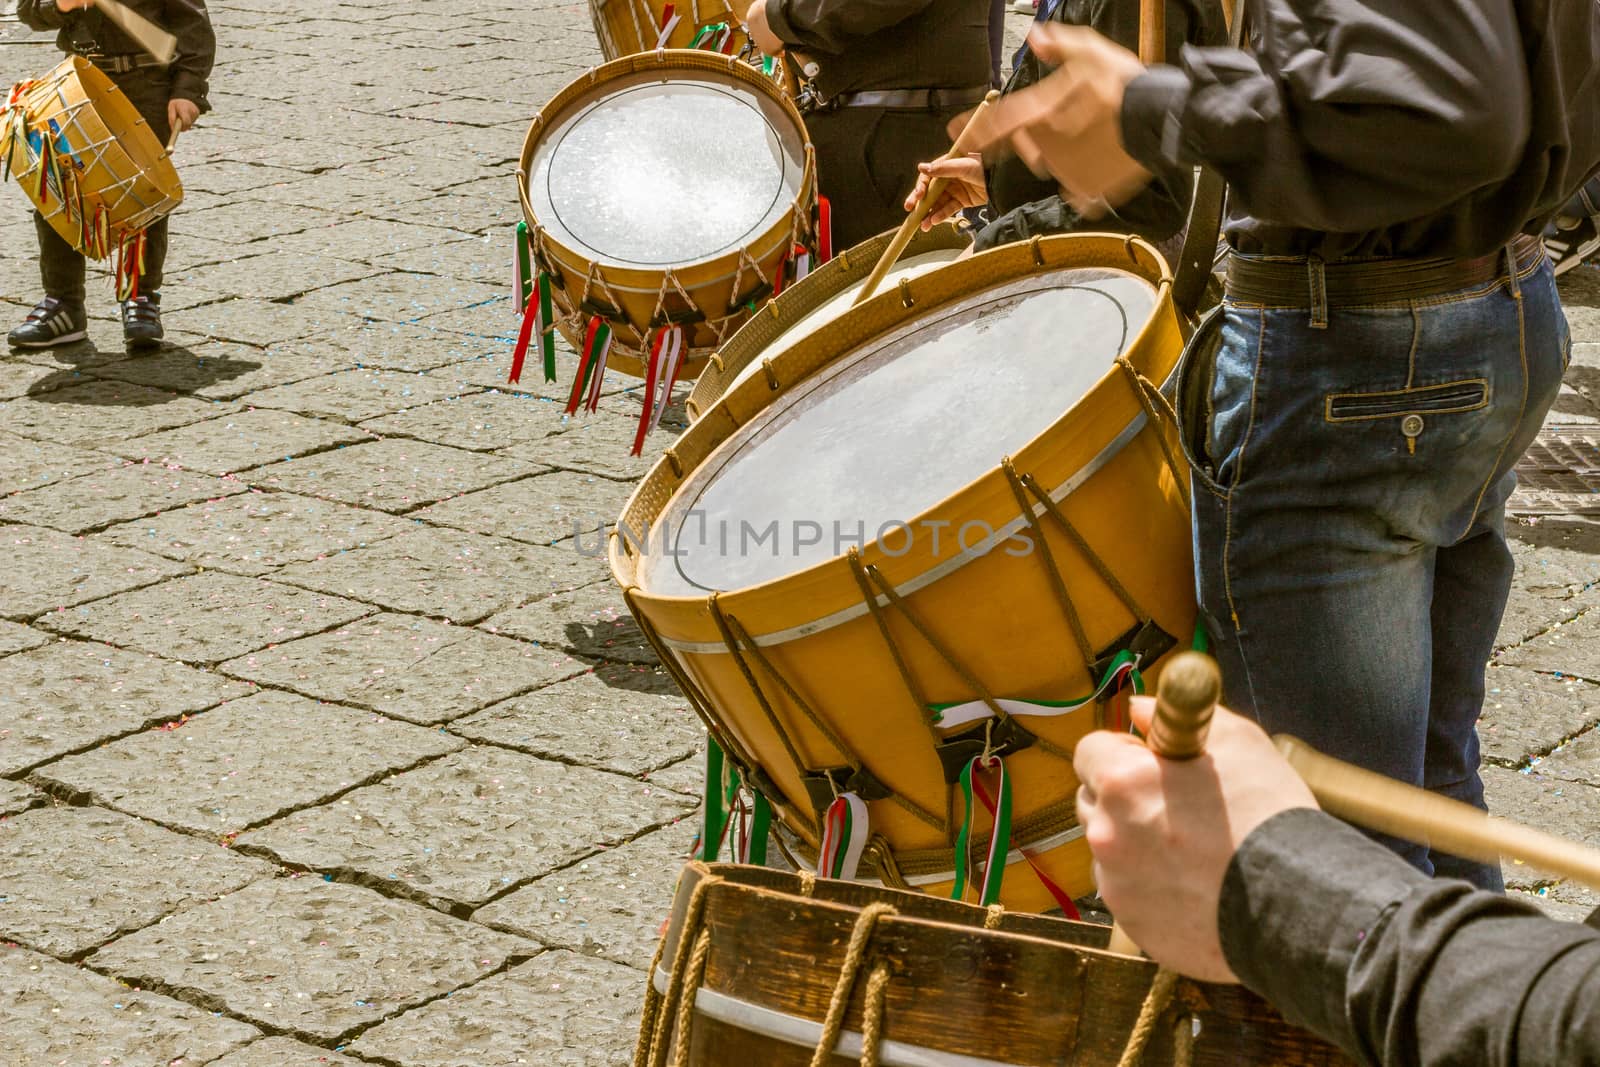 The drummers men by alanstix64